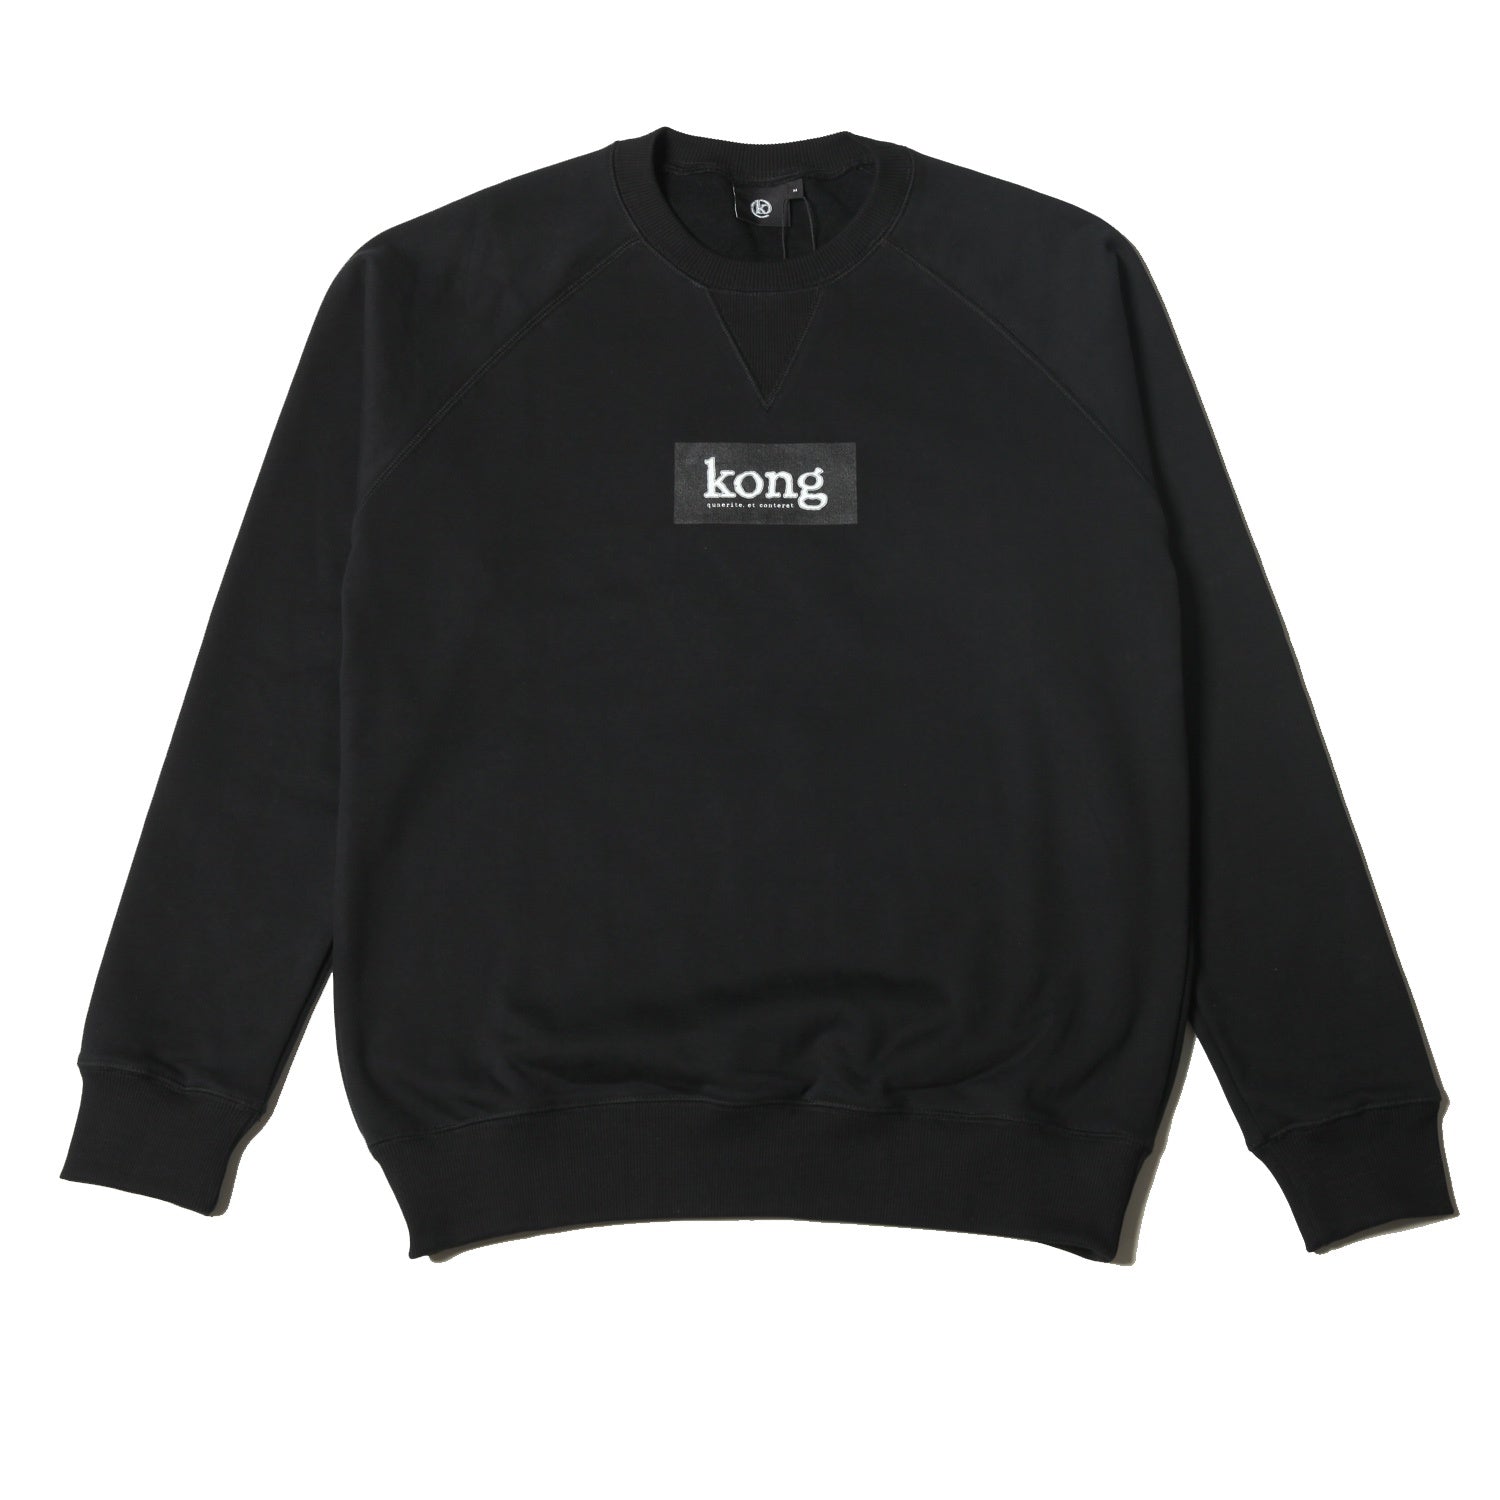 Kong Big Skull Sweatshirt Black